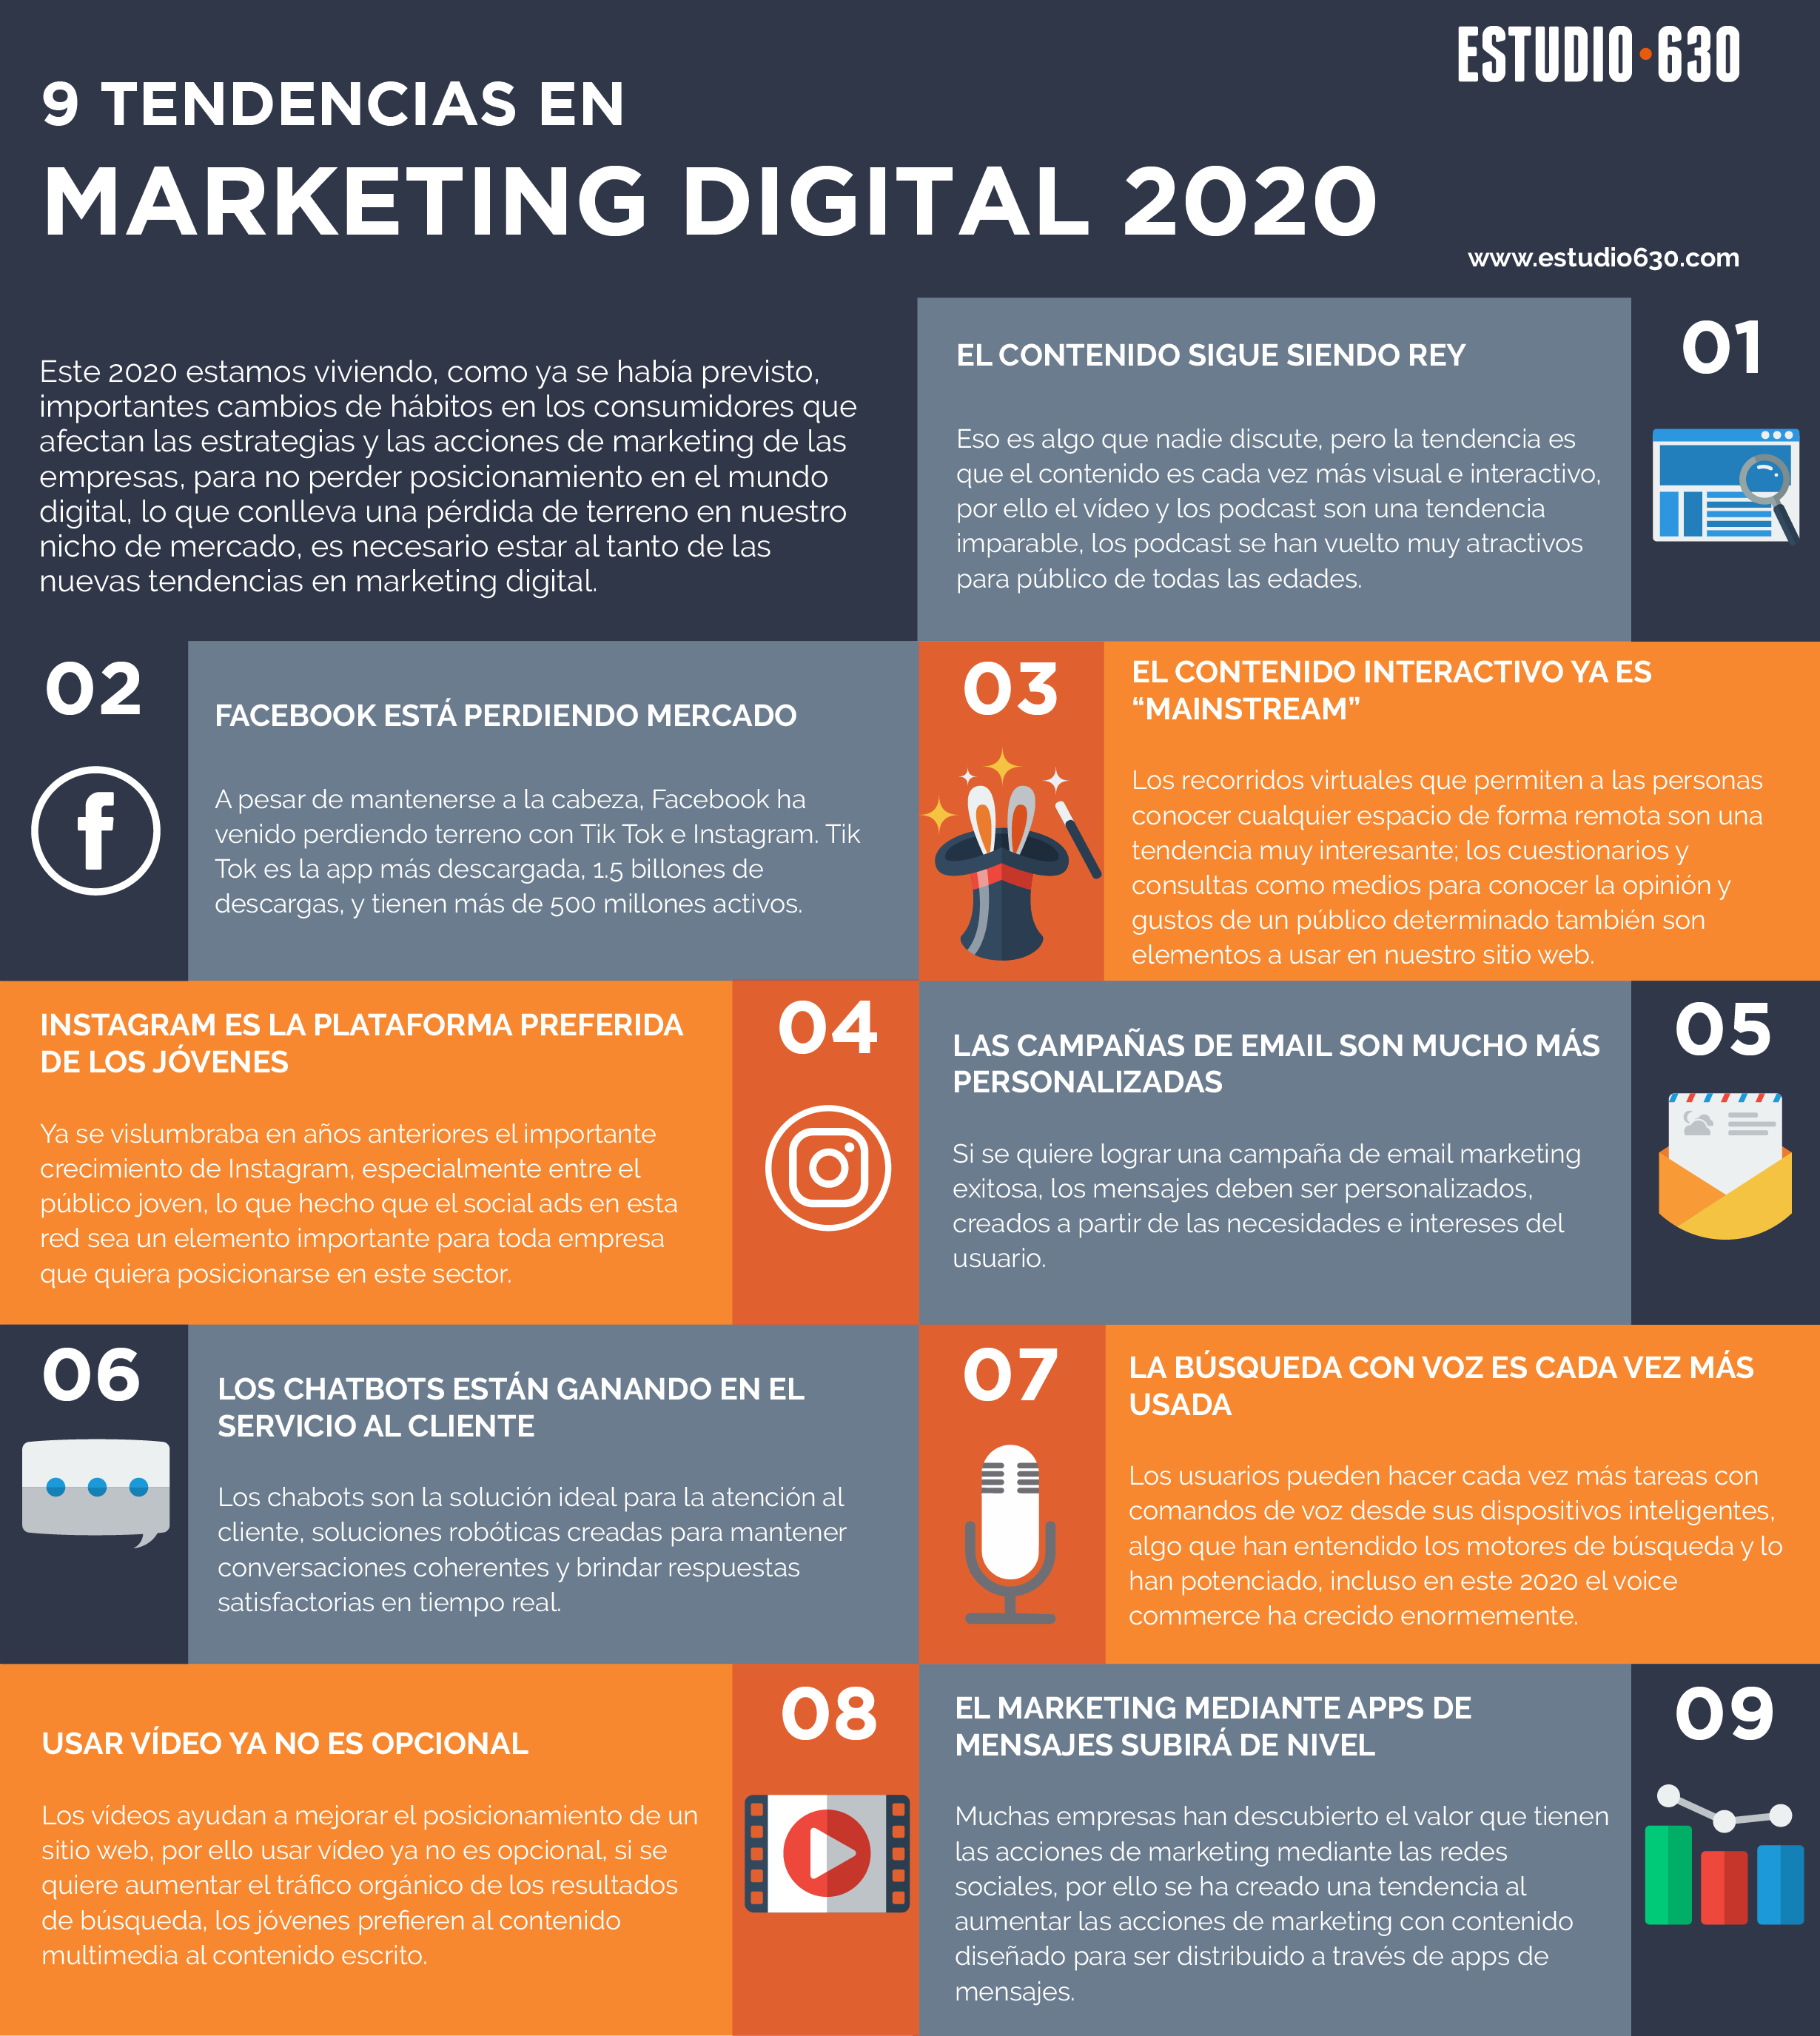 tendencias en marketing digital 2020 - infografias marketing Mesa de trabajo 1 - 9 tendencias en Marketing Digital 2020 (infografía)